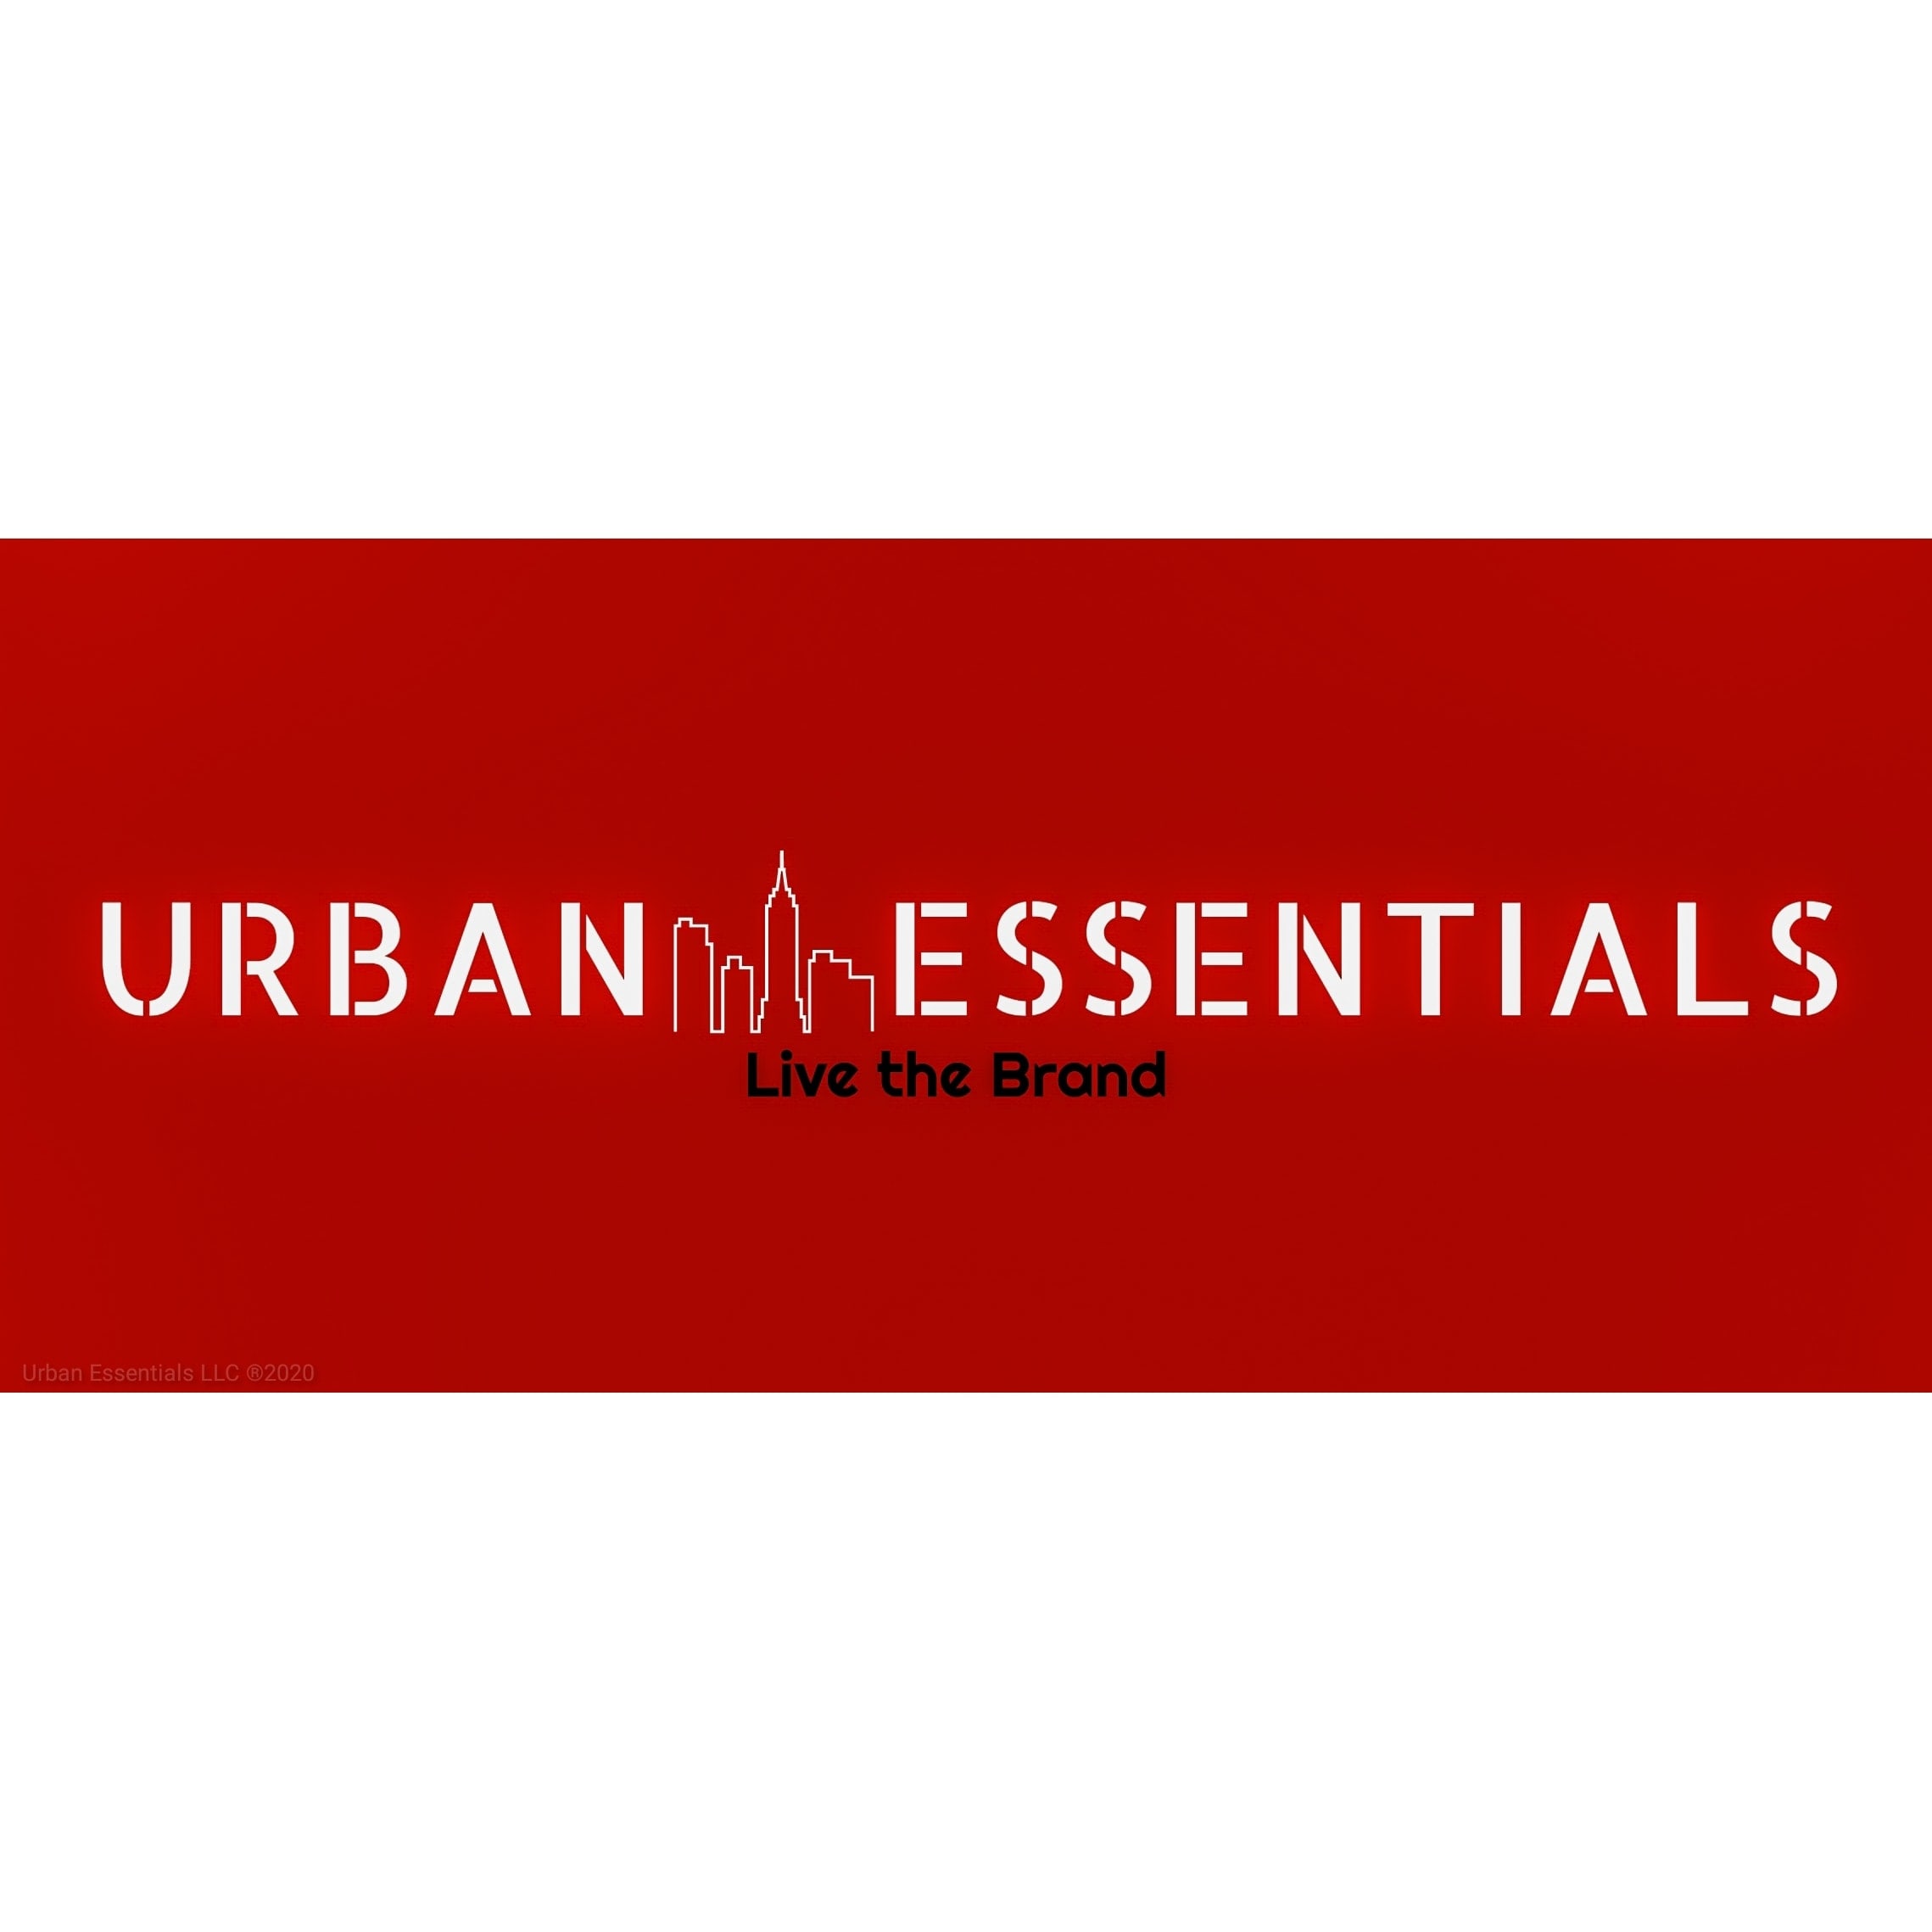 Urban Essentials, LLC